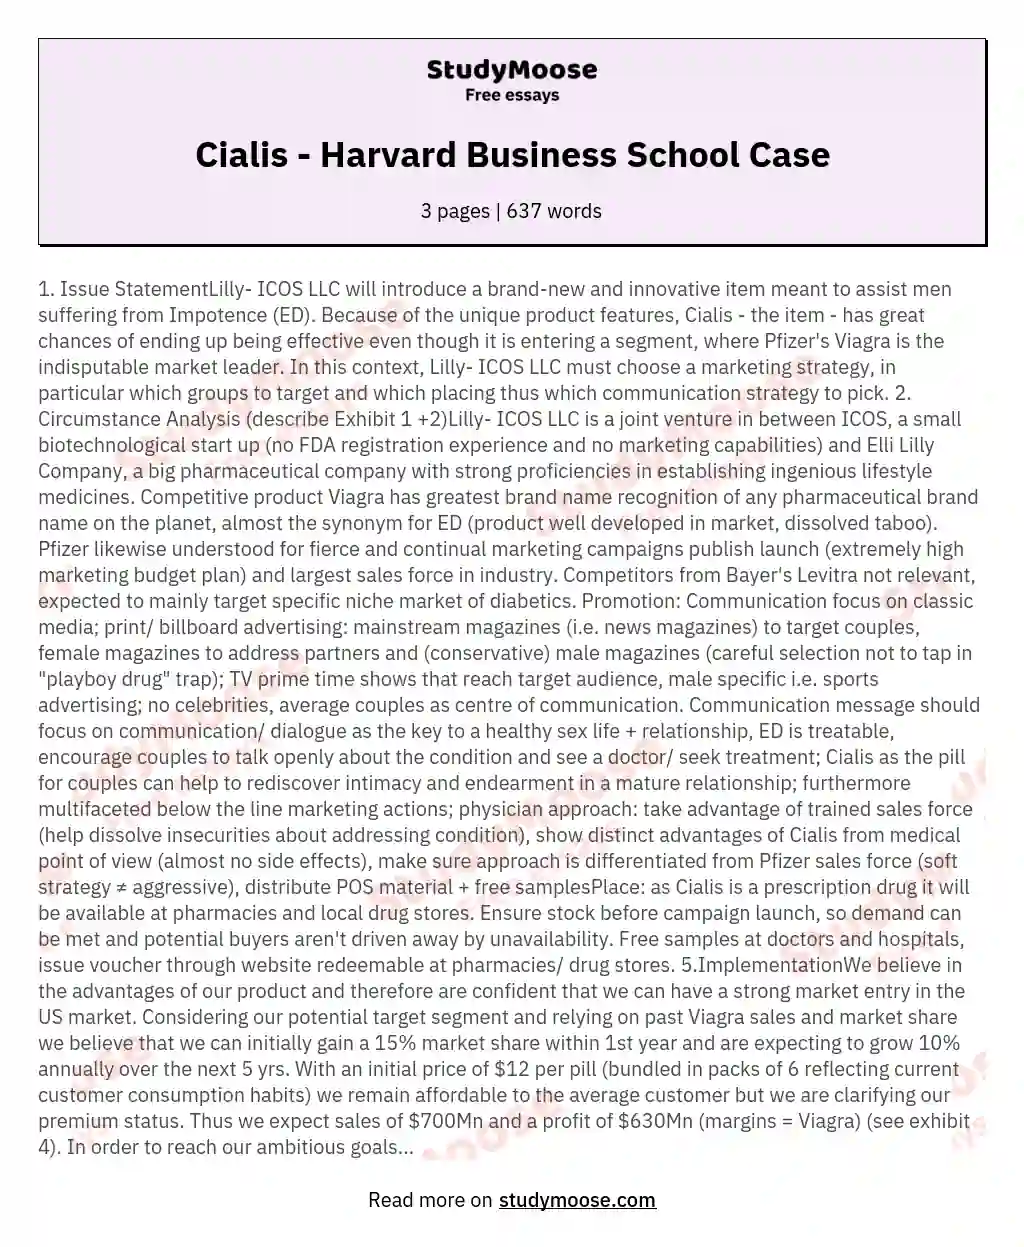 Cialis - Harvard Business School Case essay